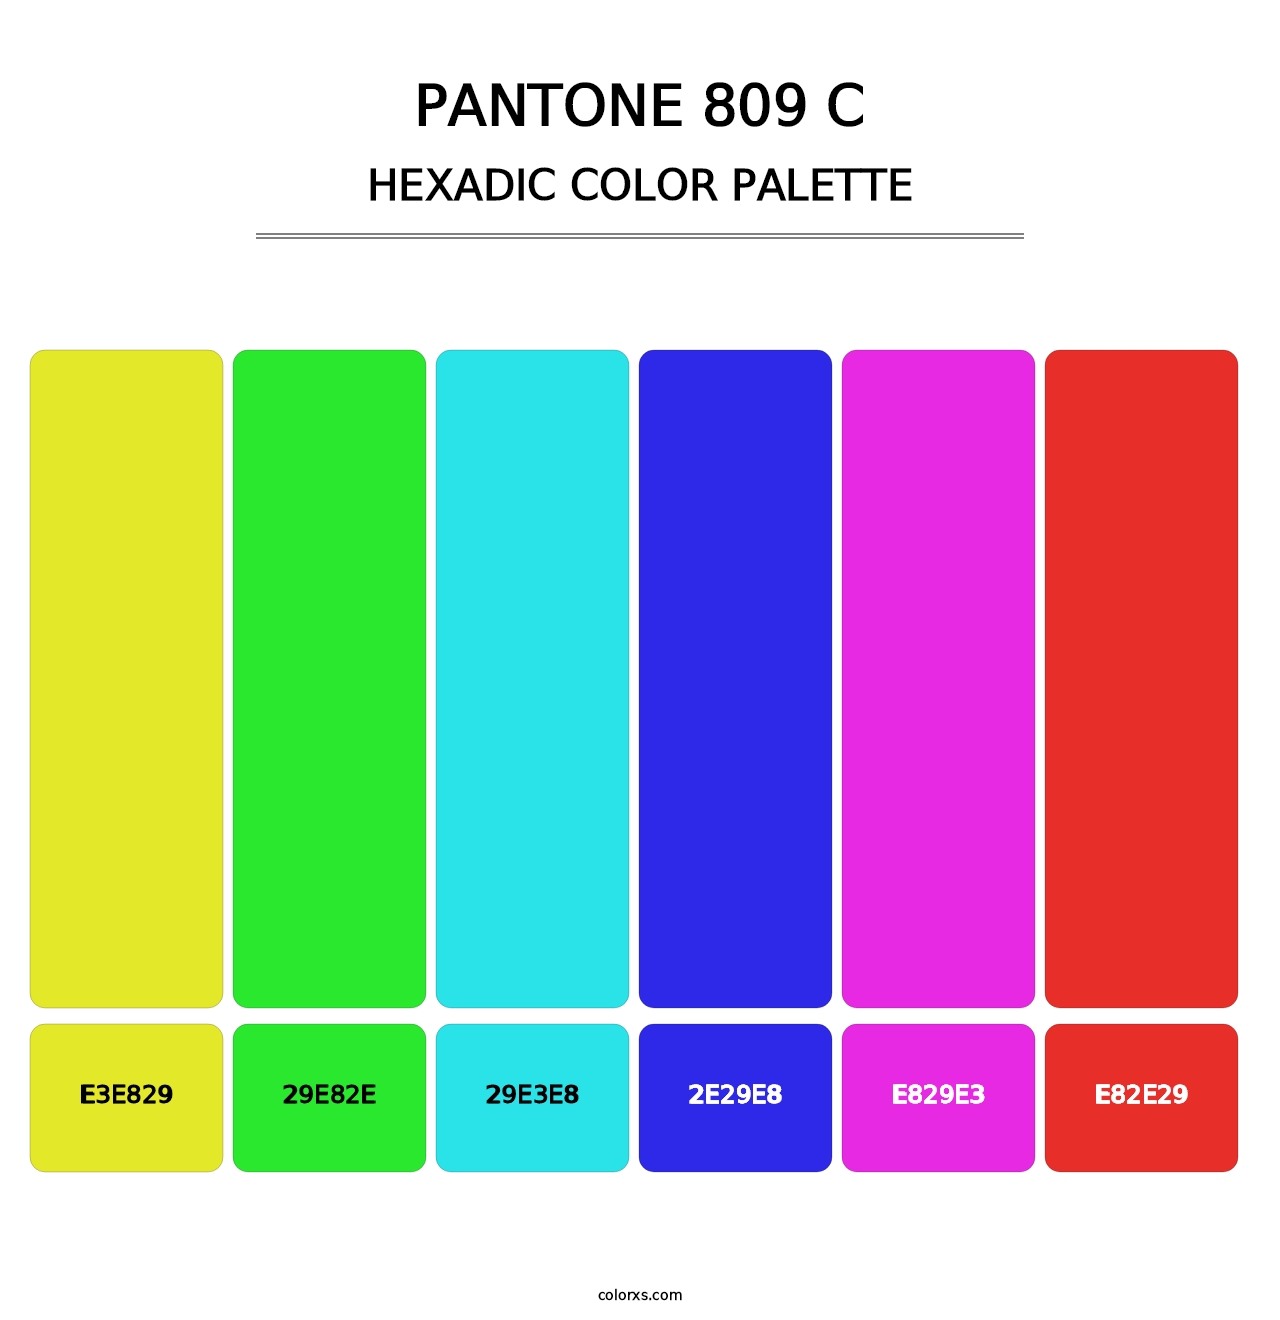 PANTONE 809 C - Hexadic Color Palette